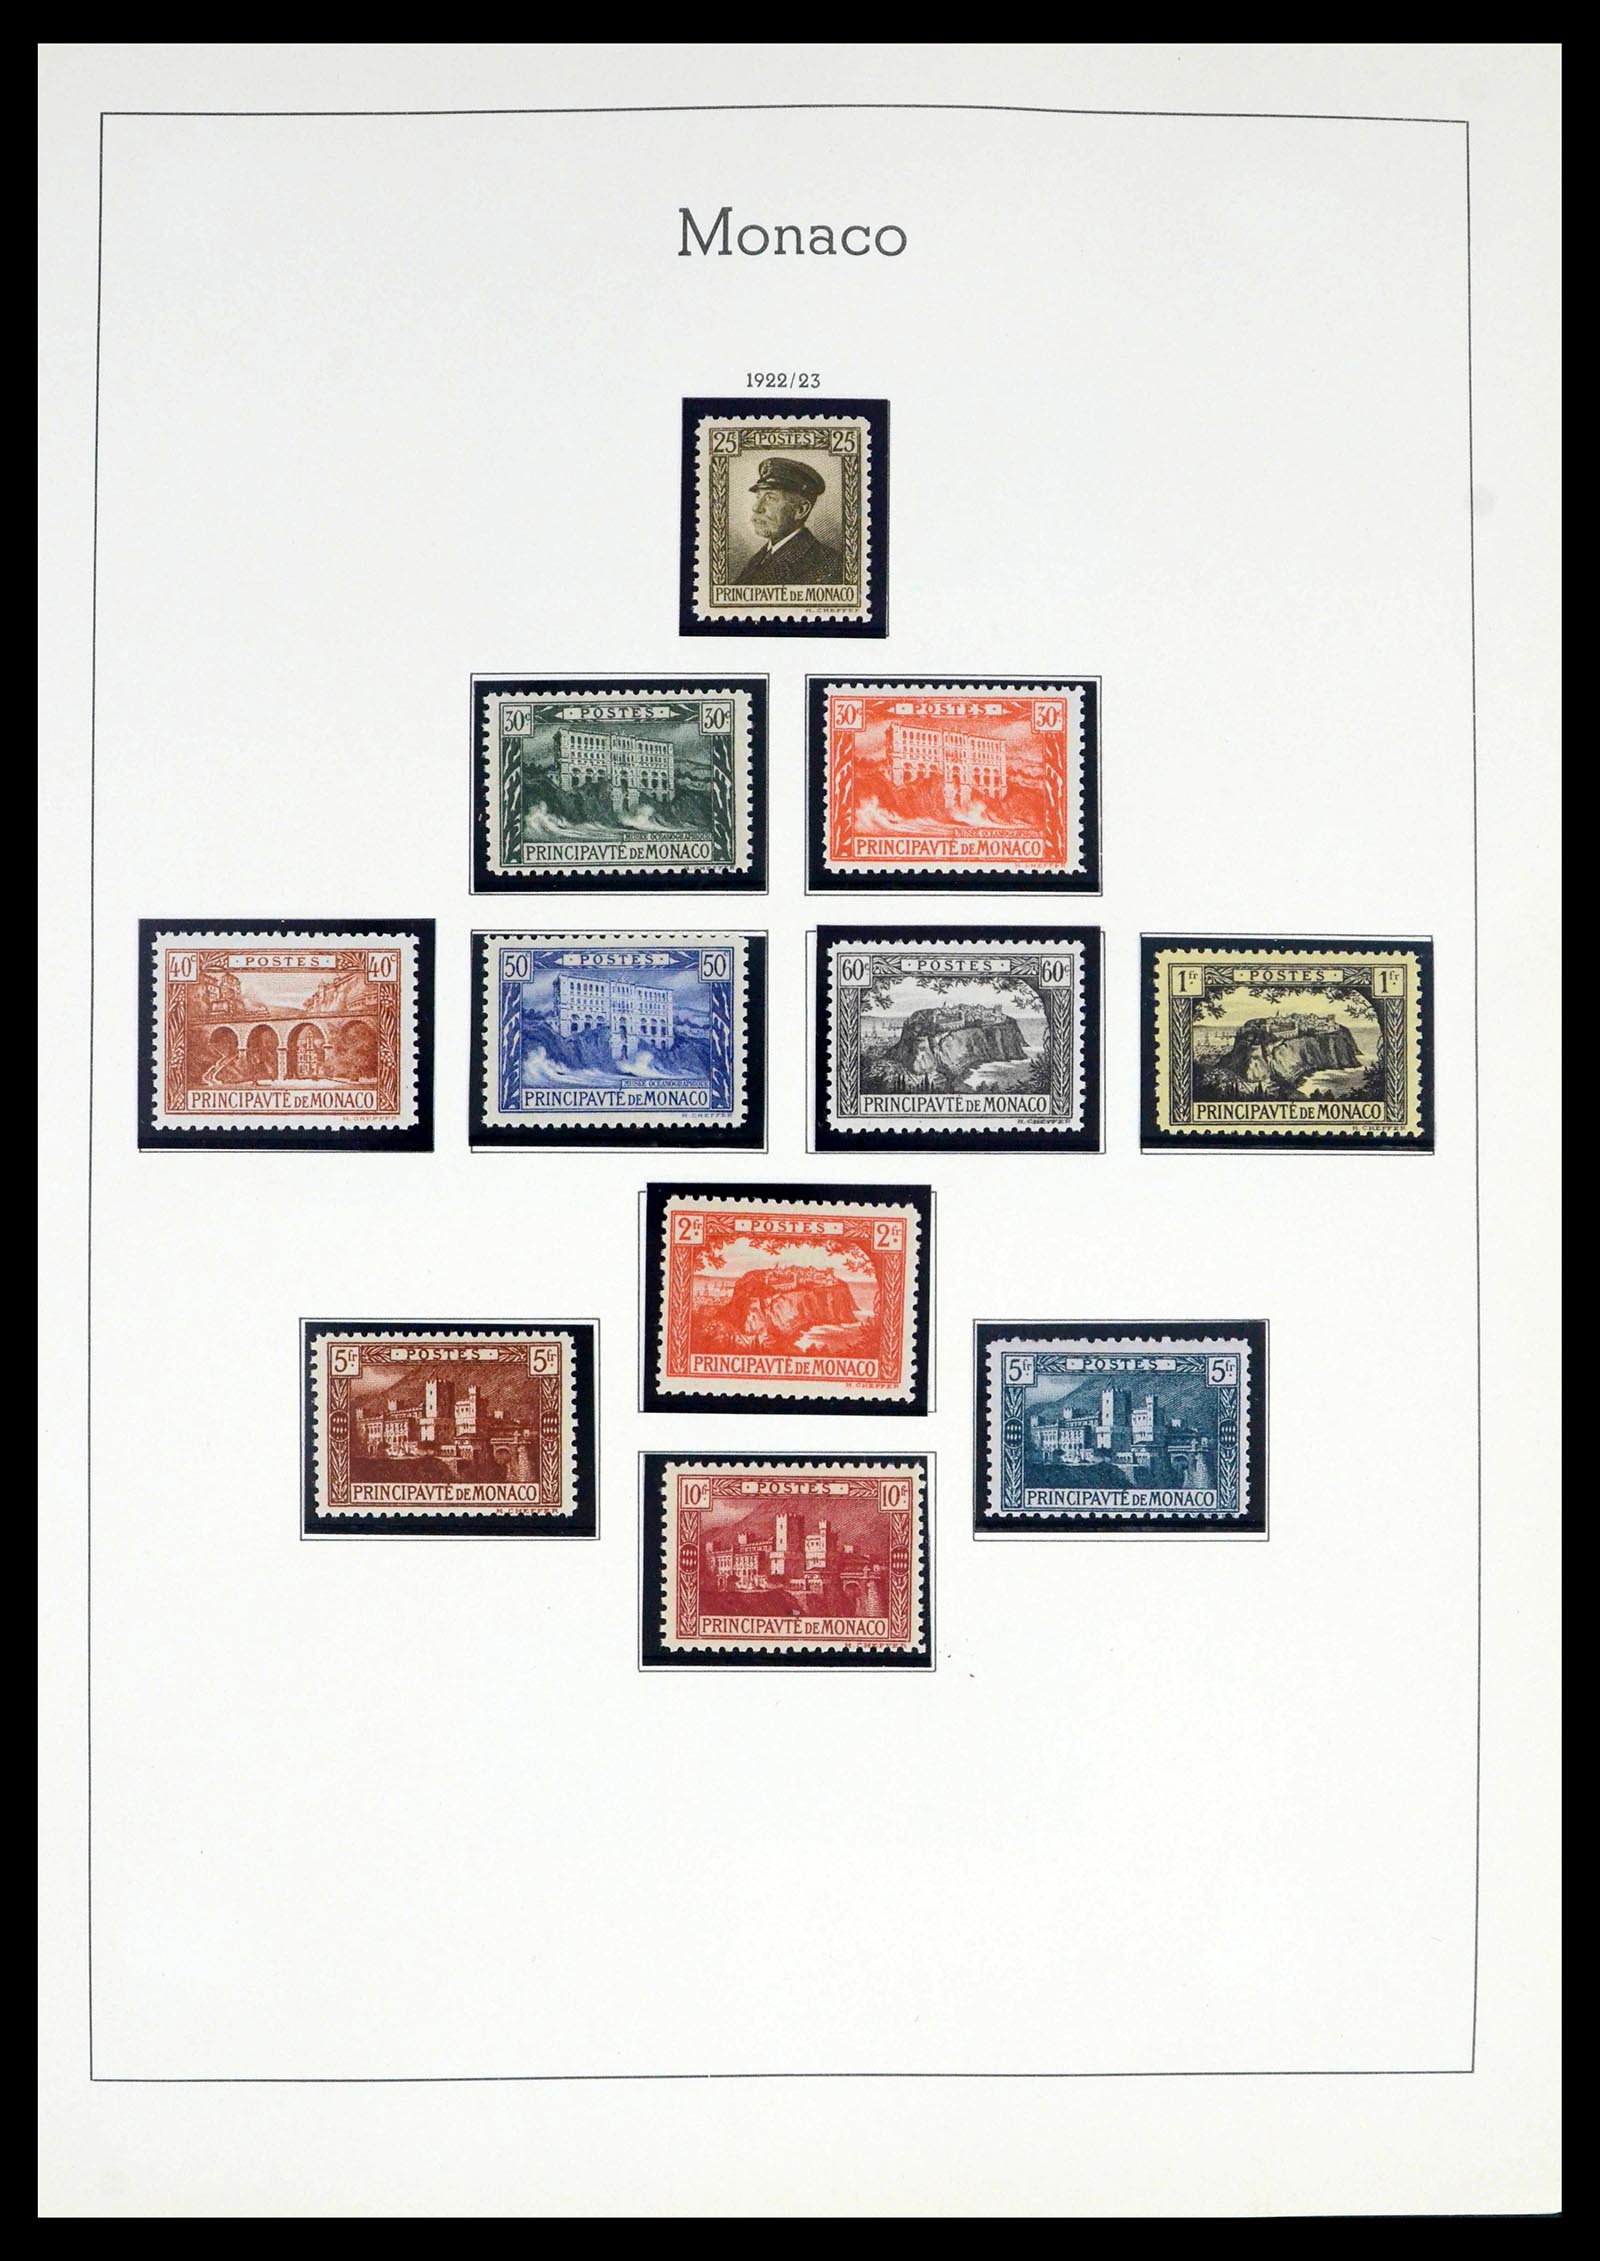 39392 0004 - Stamp collection 39392 Monaco 1885-1999.